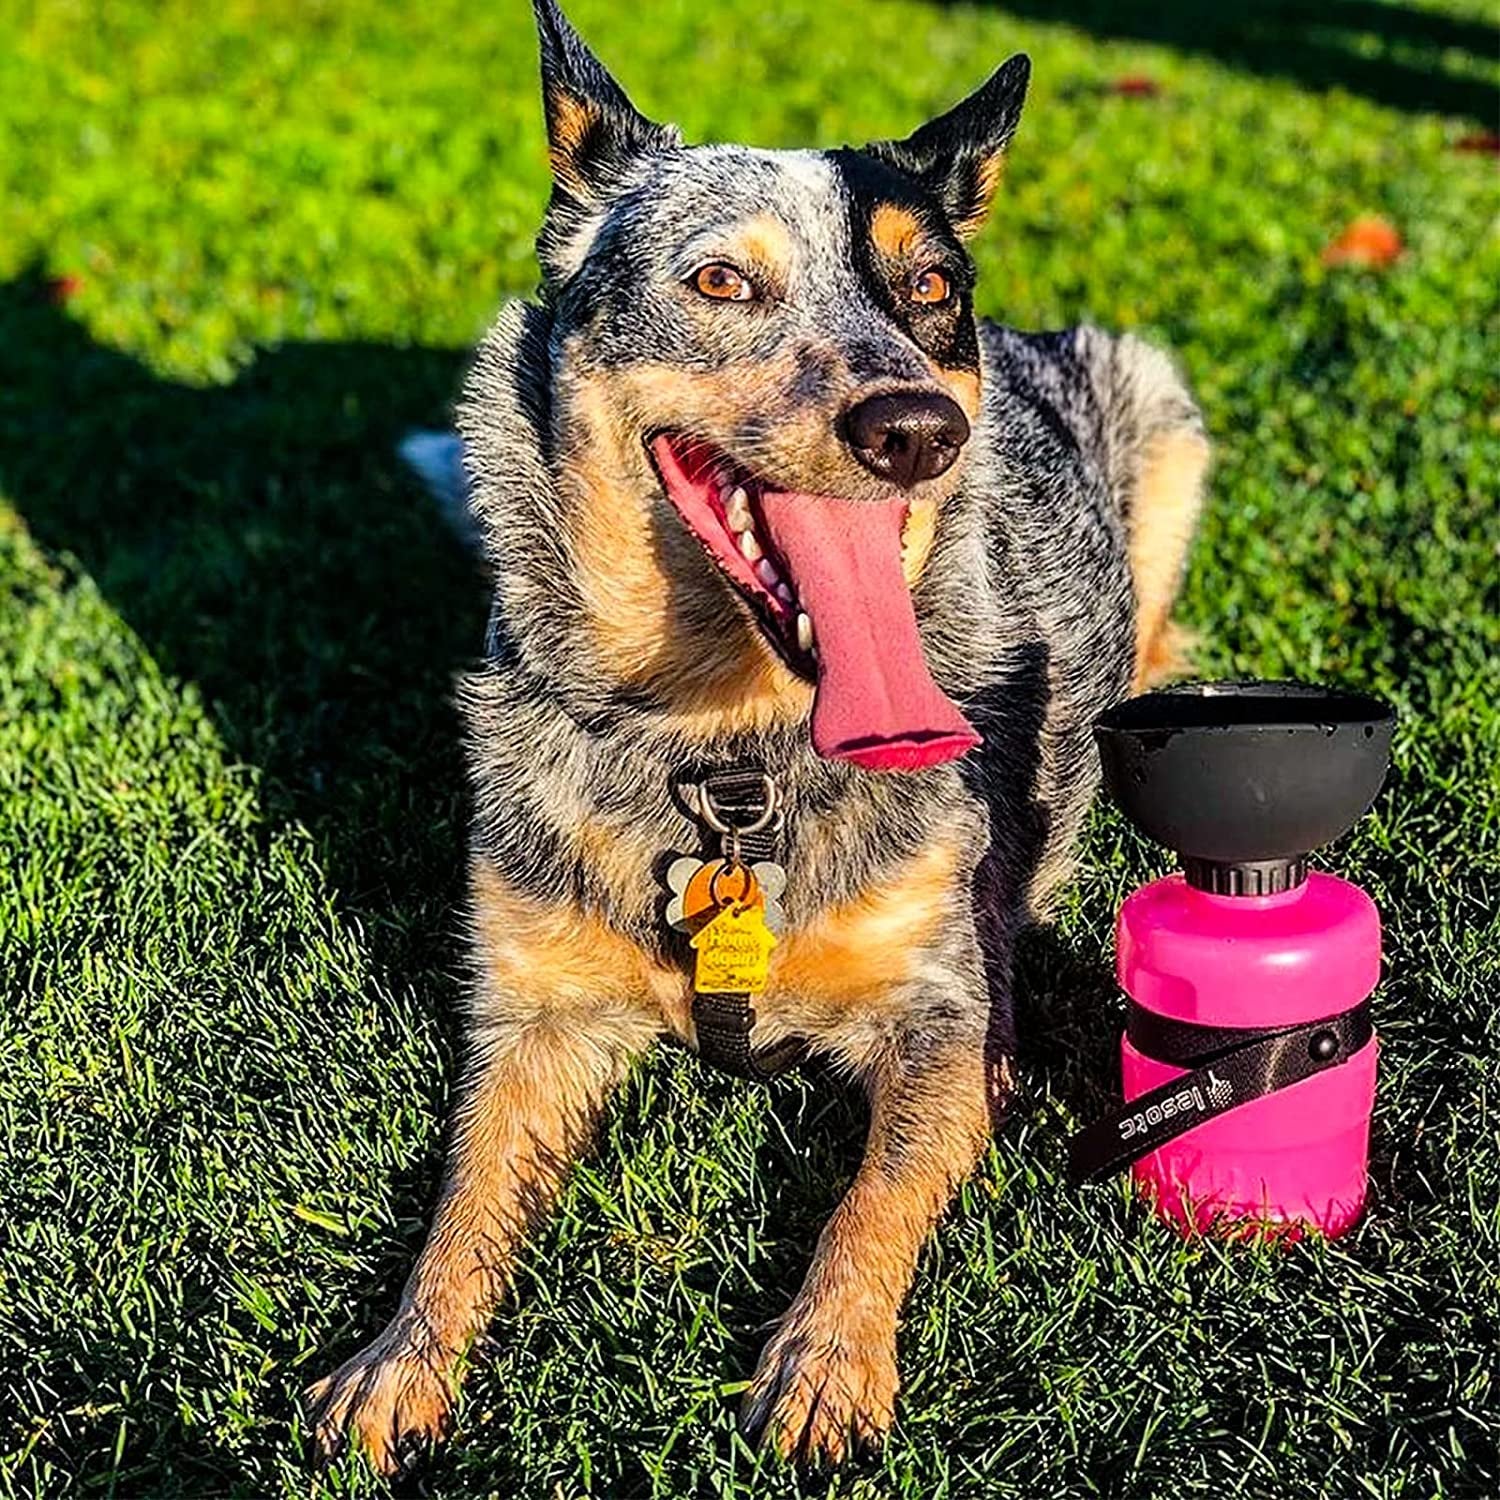 Upgraded Dog Water Bottle Foldable,Portable Dog Water Dispenser,Leak Proof Pet Water Bottle for Dogs,Dog Travel Water Bottle for Outdoor Walking,Hiking,Travel,Bpa Free,Lightweight